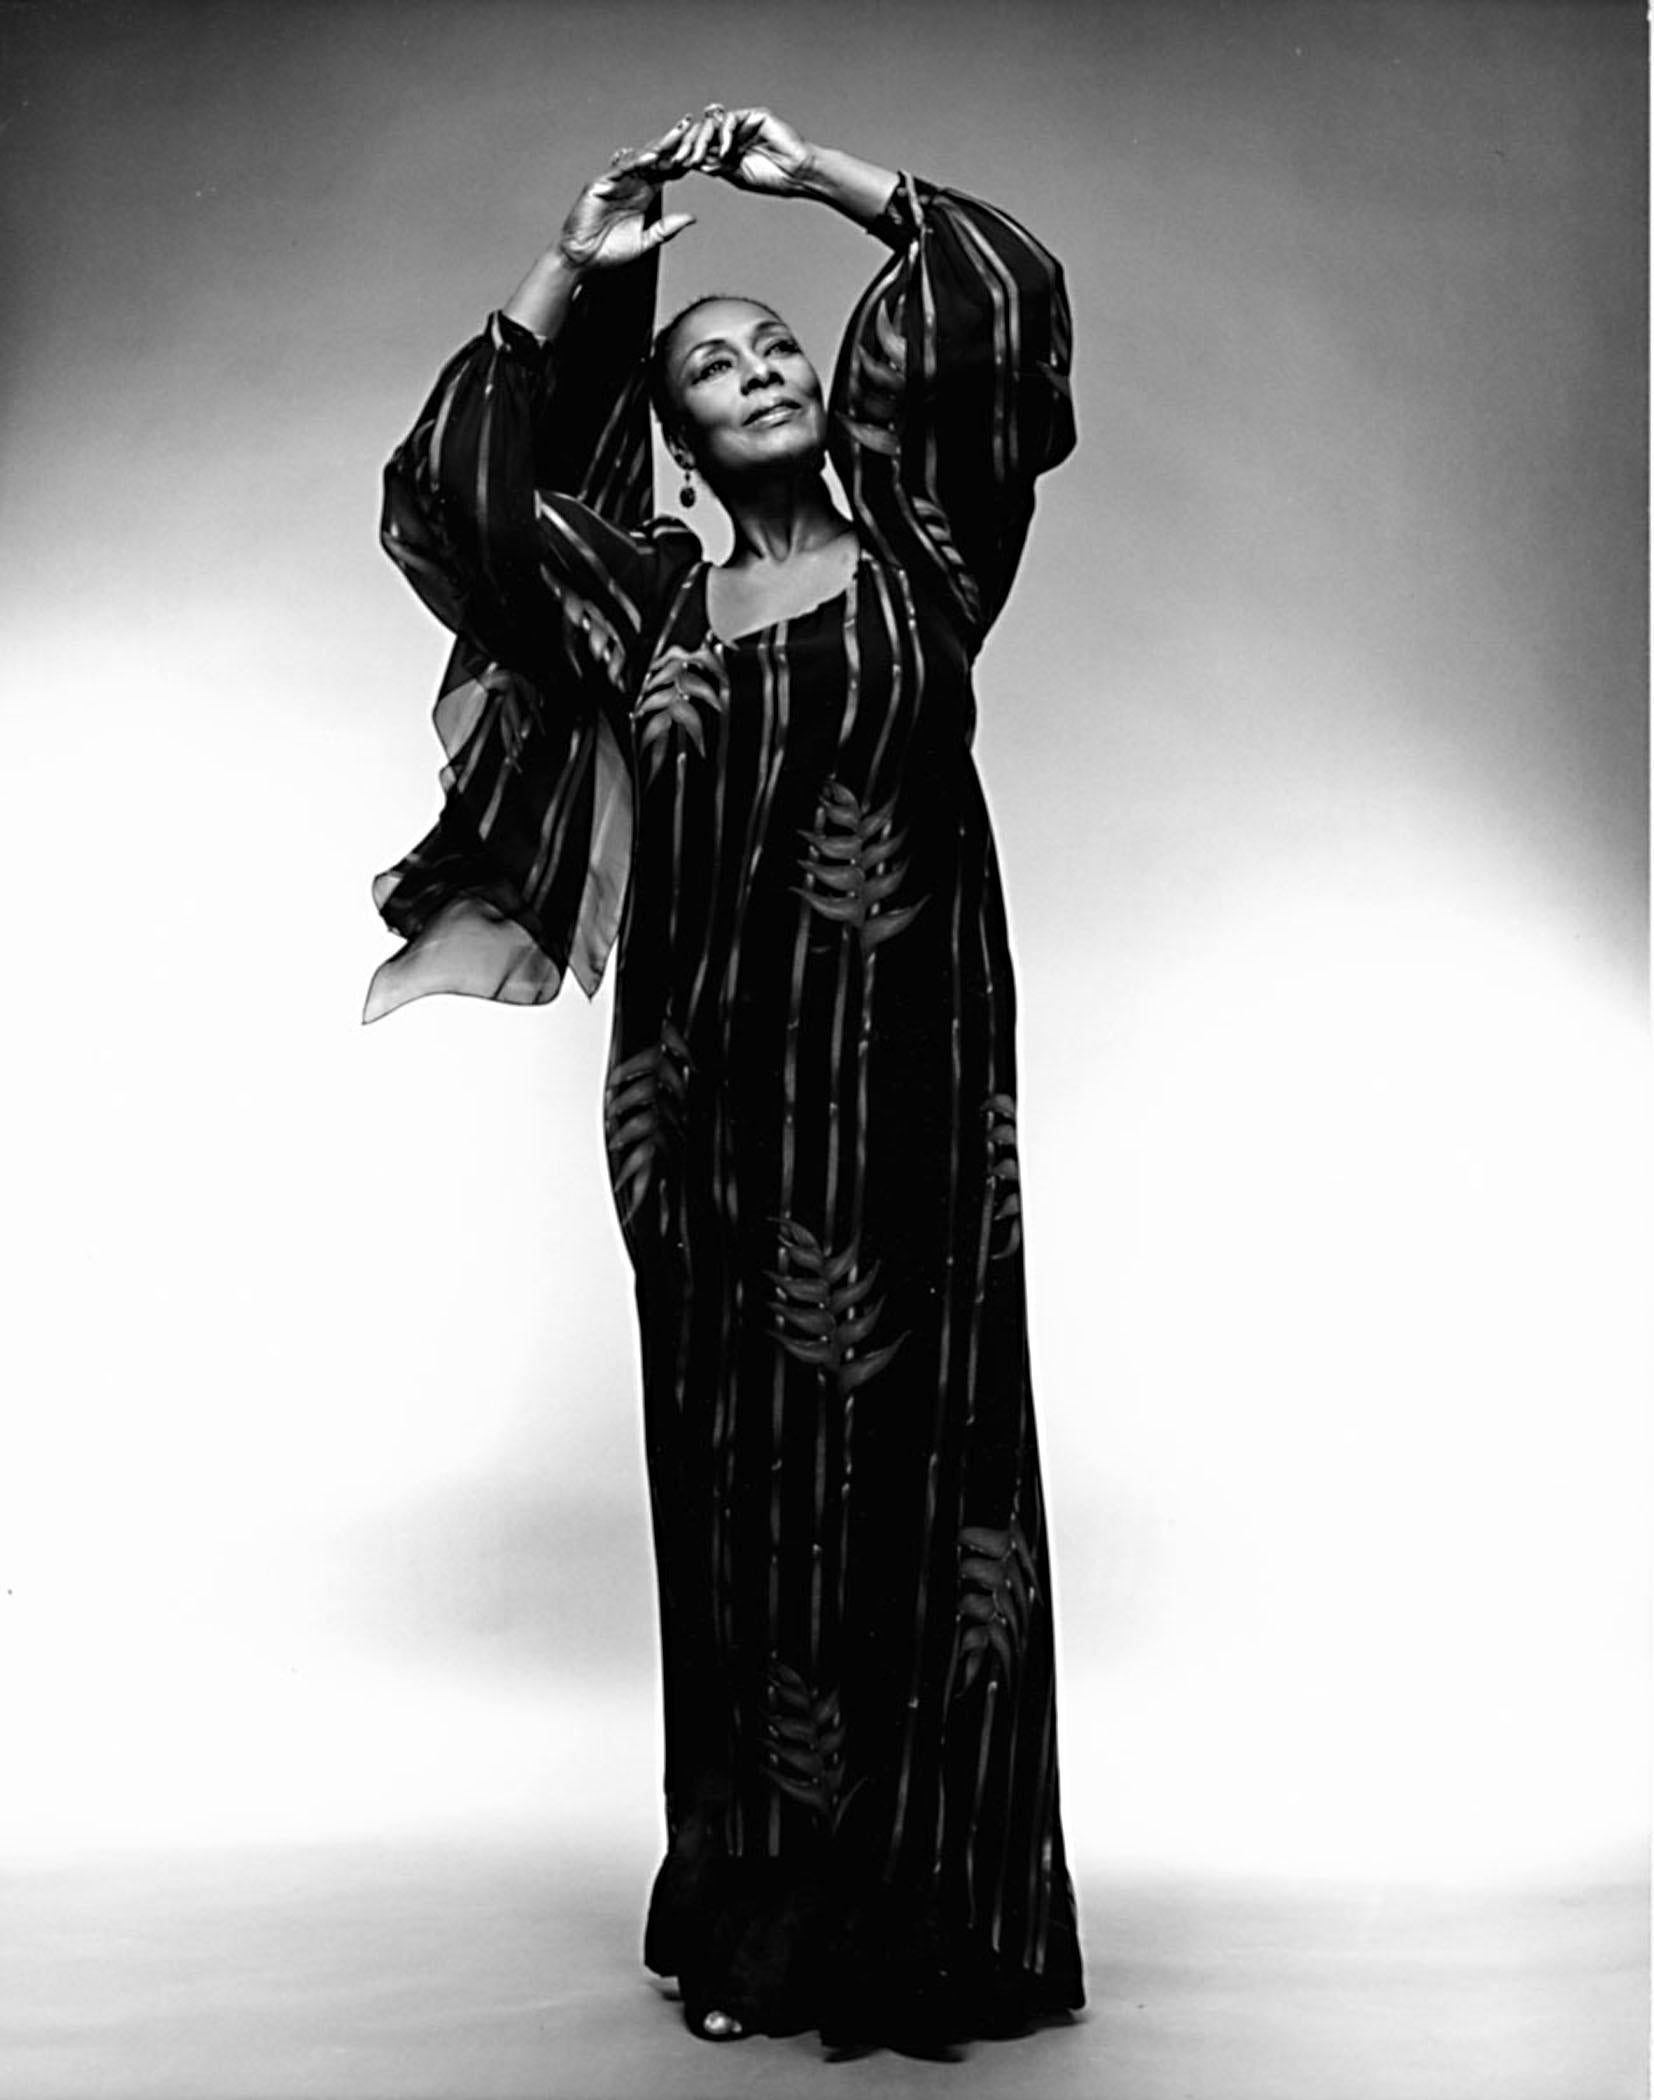 Jack Mitchell Black and White Photograph –  Metropolitan Opera Soprano Shirley Verrett